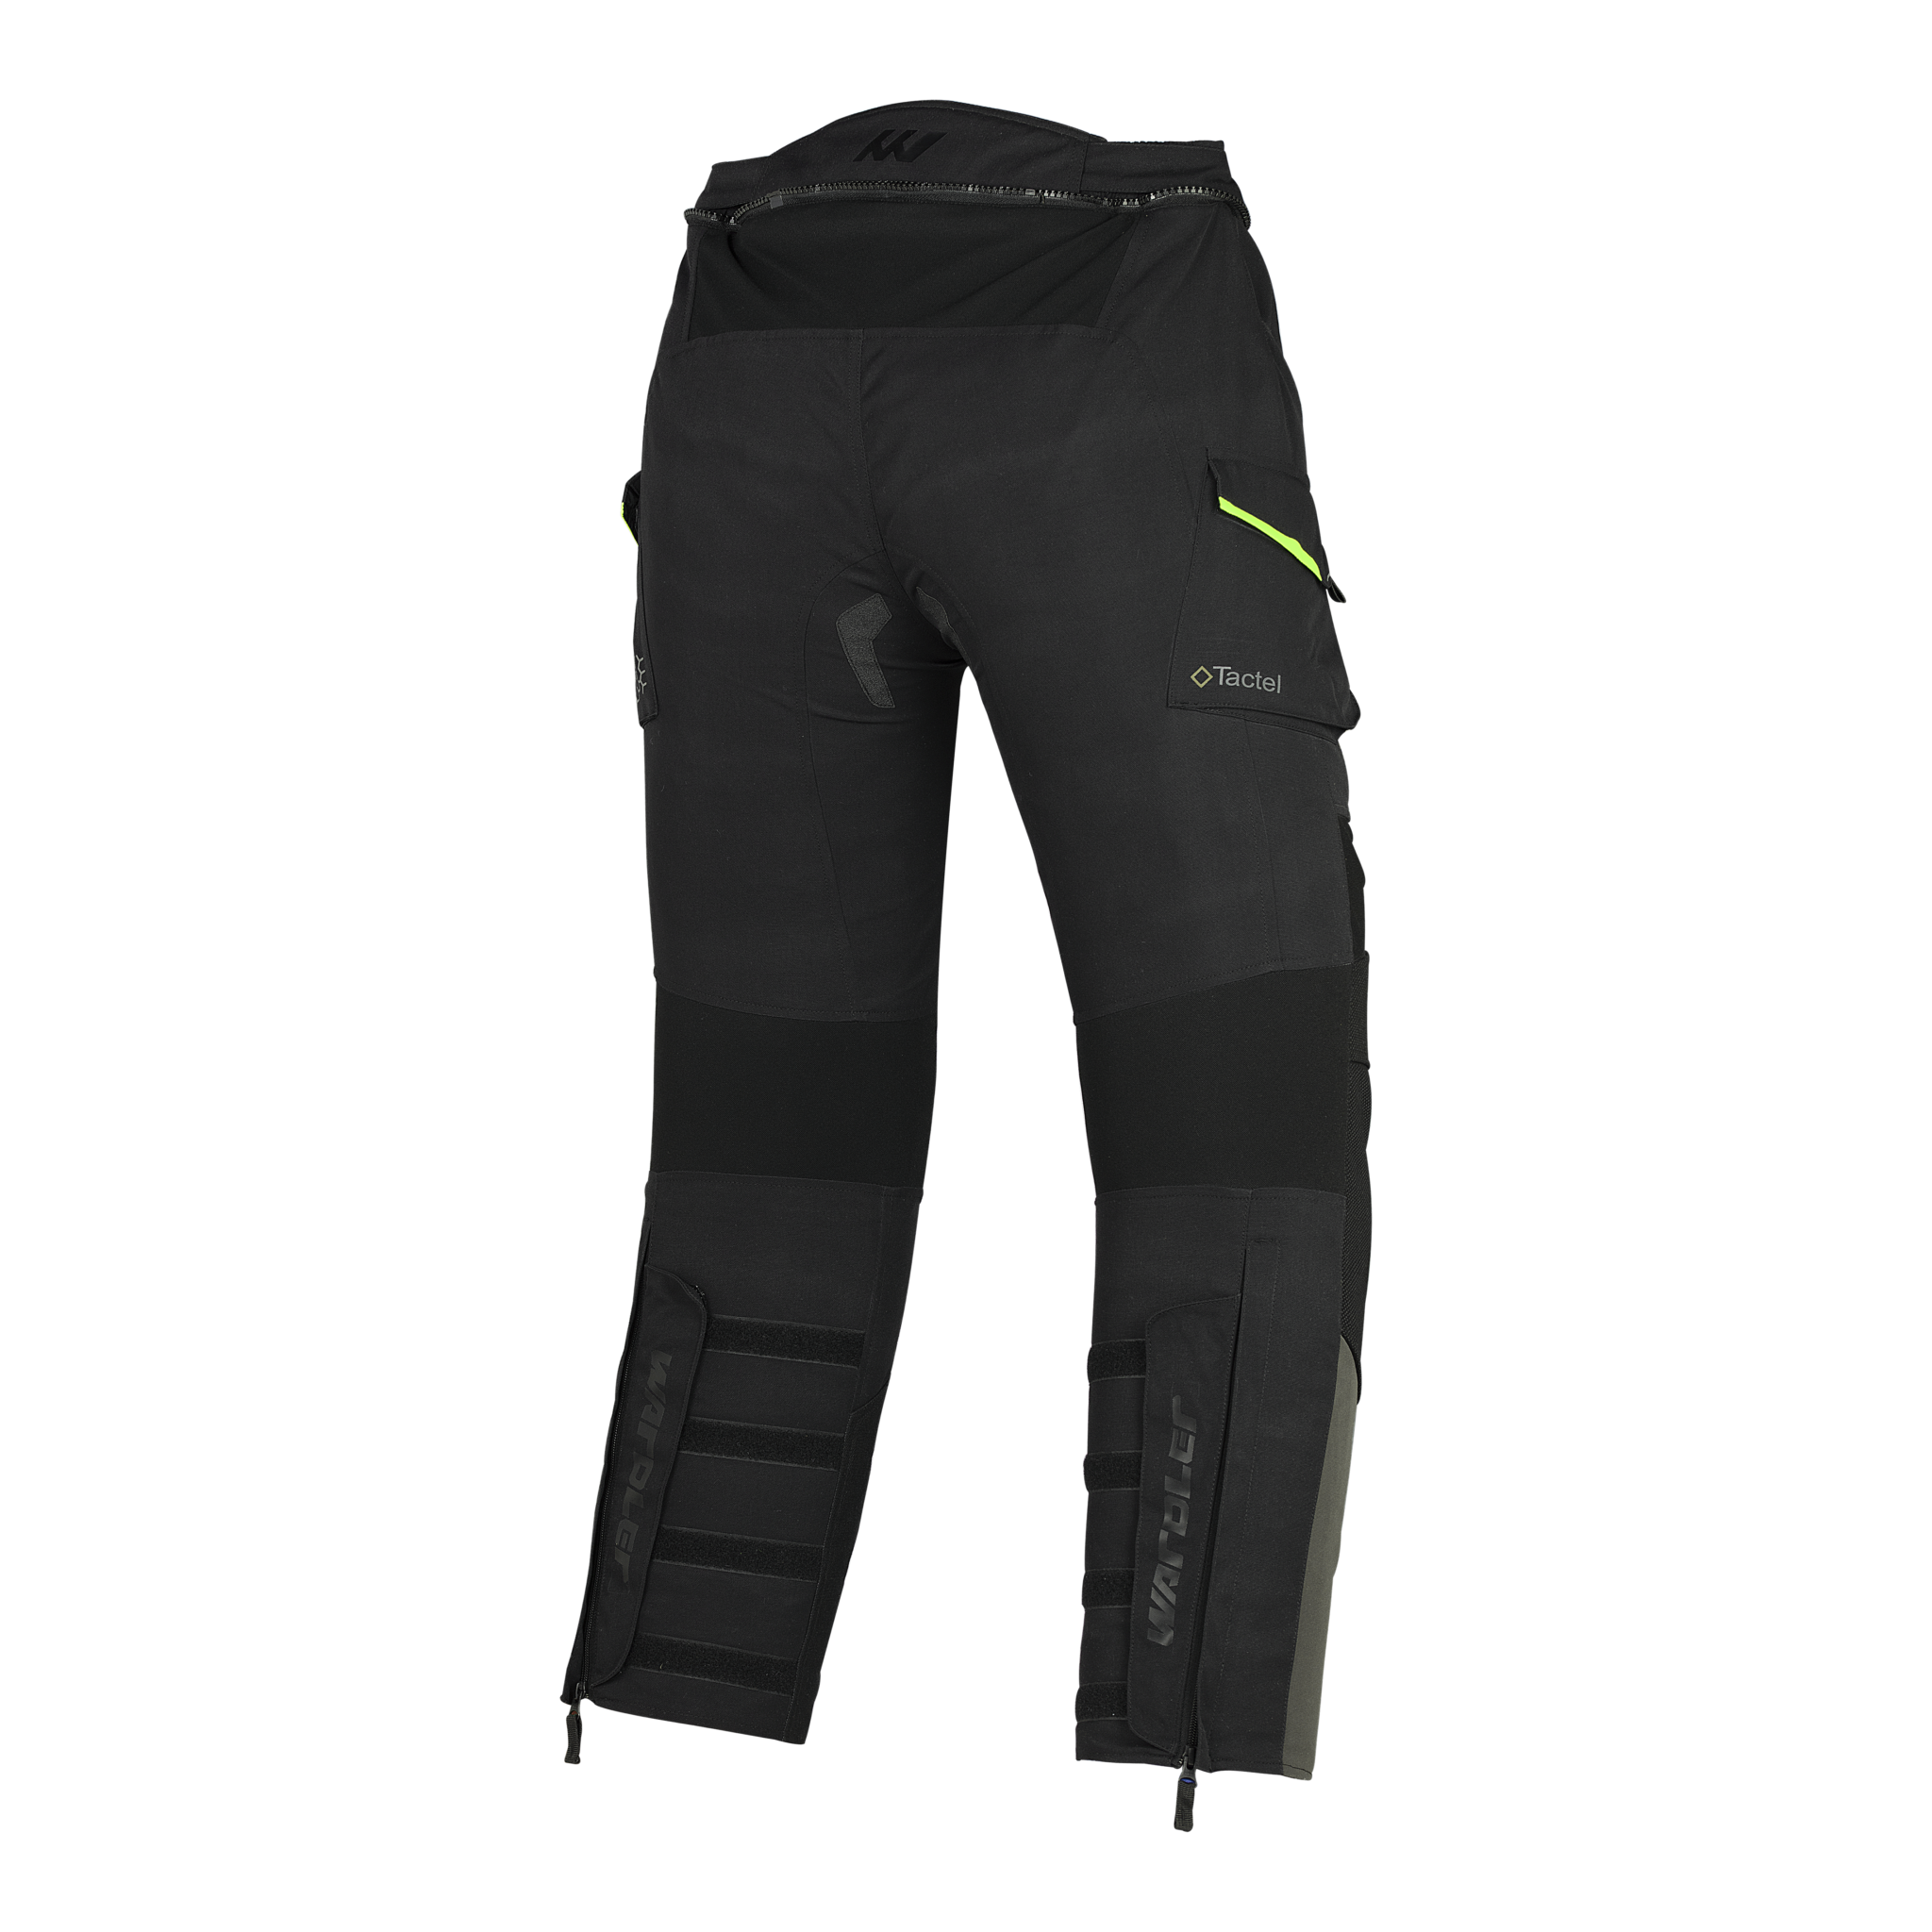 Wardler Textile Motorcycle Pants, Black-Anthracite, Back View